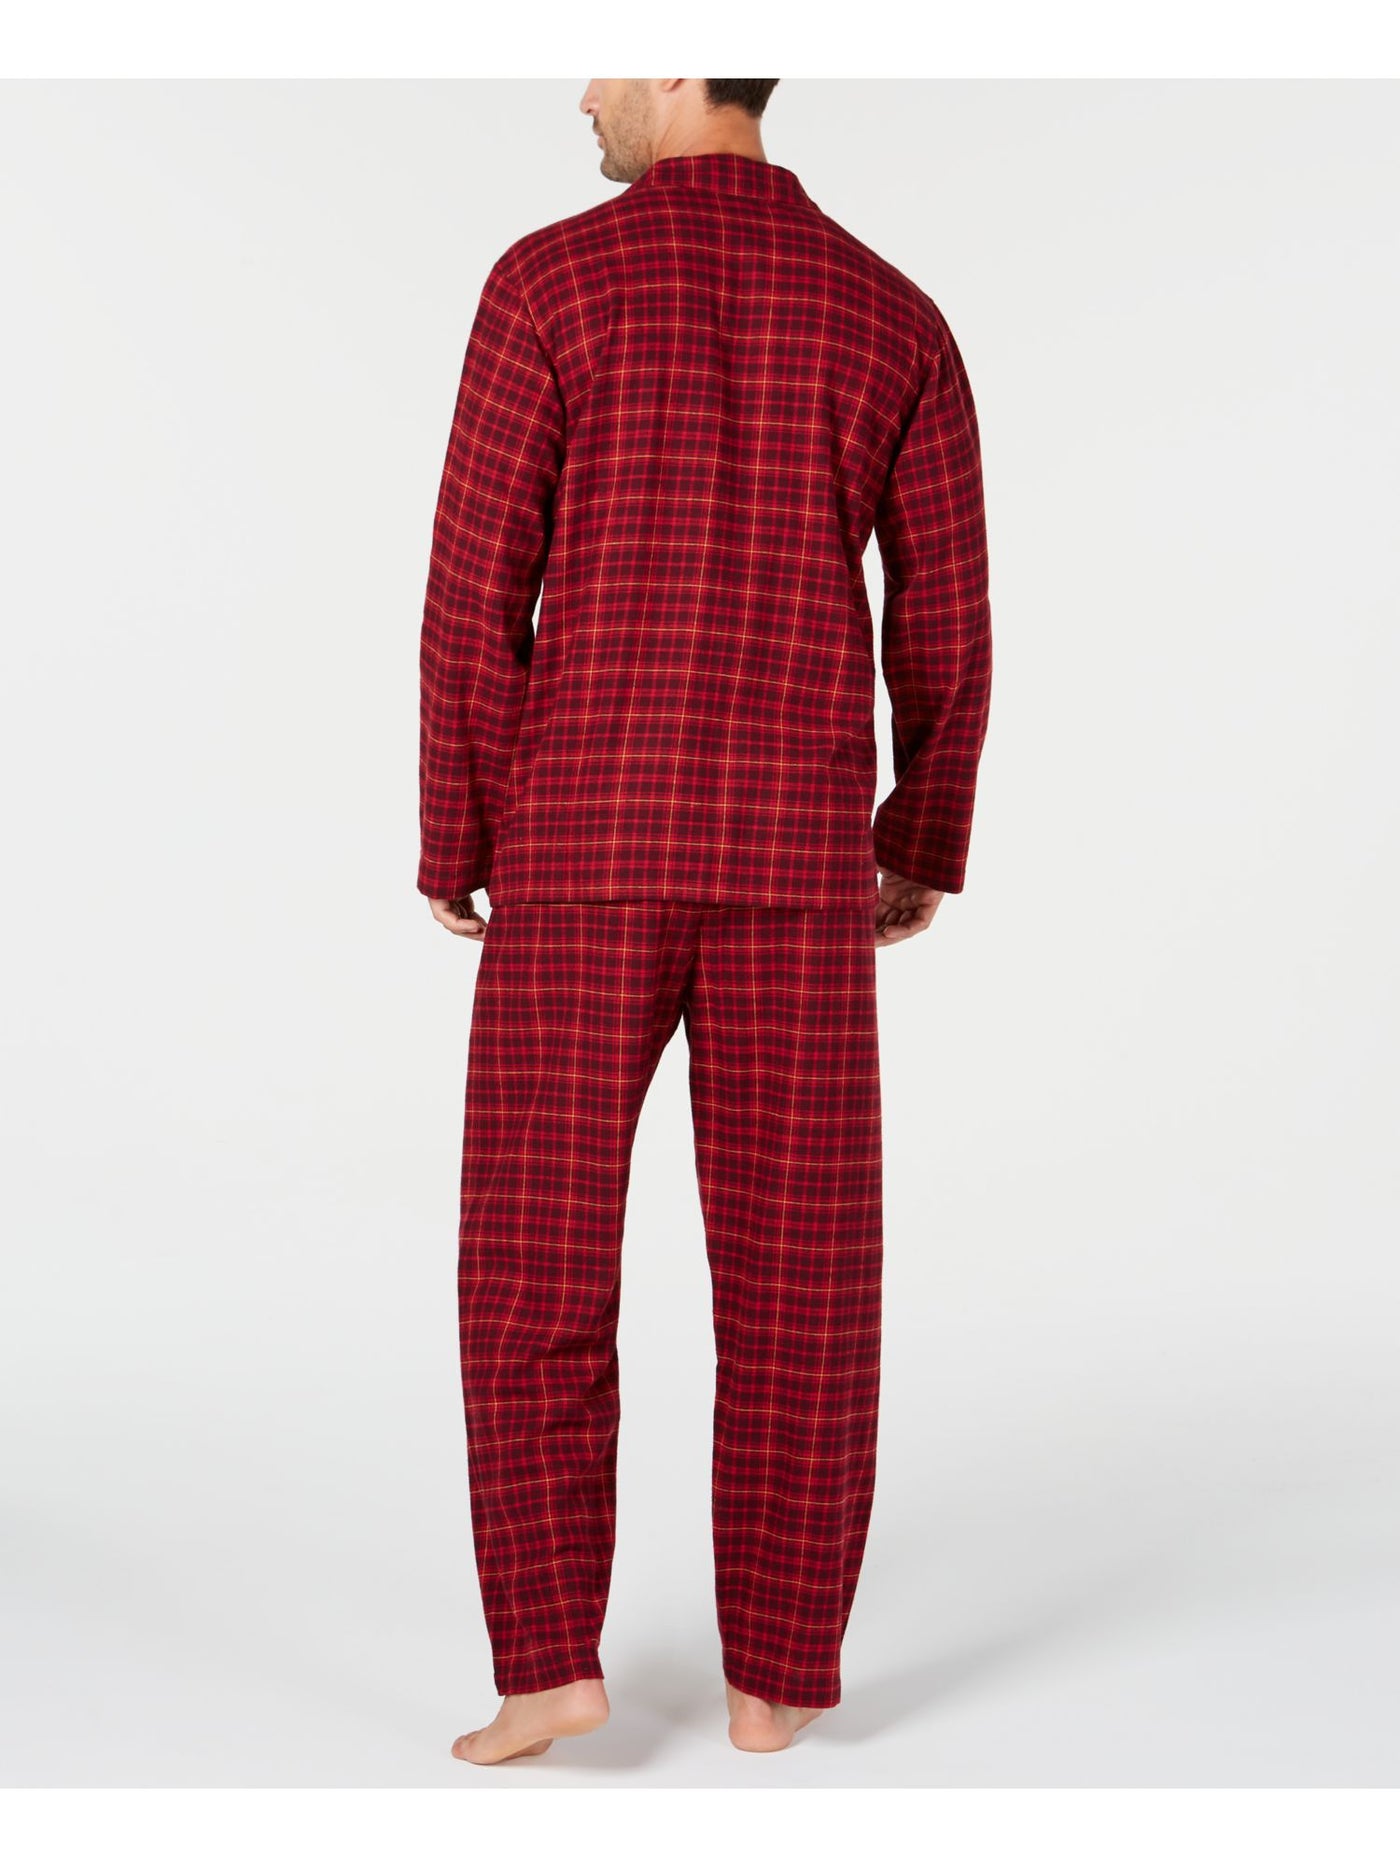 CLUBROOM Mens Red Plaid Elastic Band Button Up Top Straight leg Pants Pajamas M